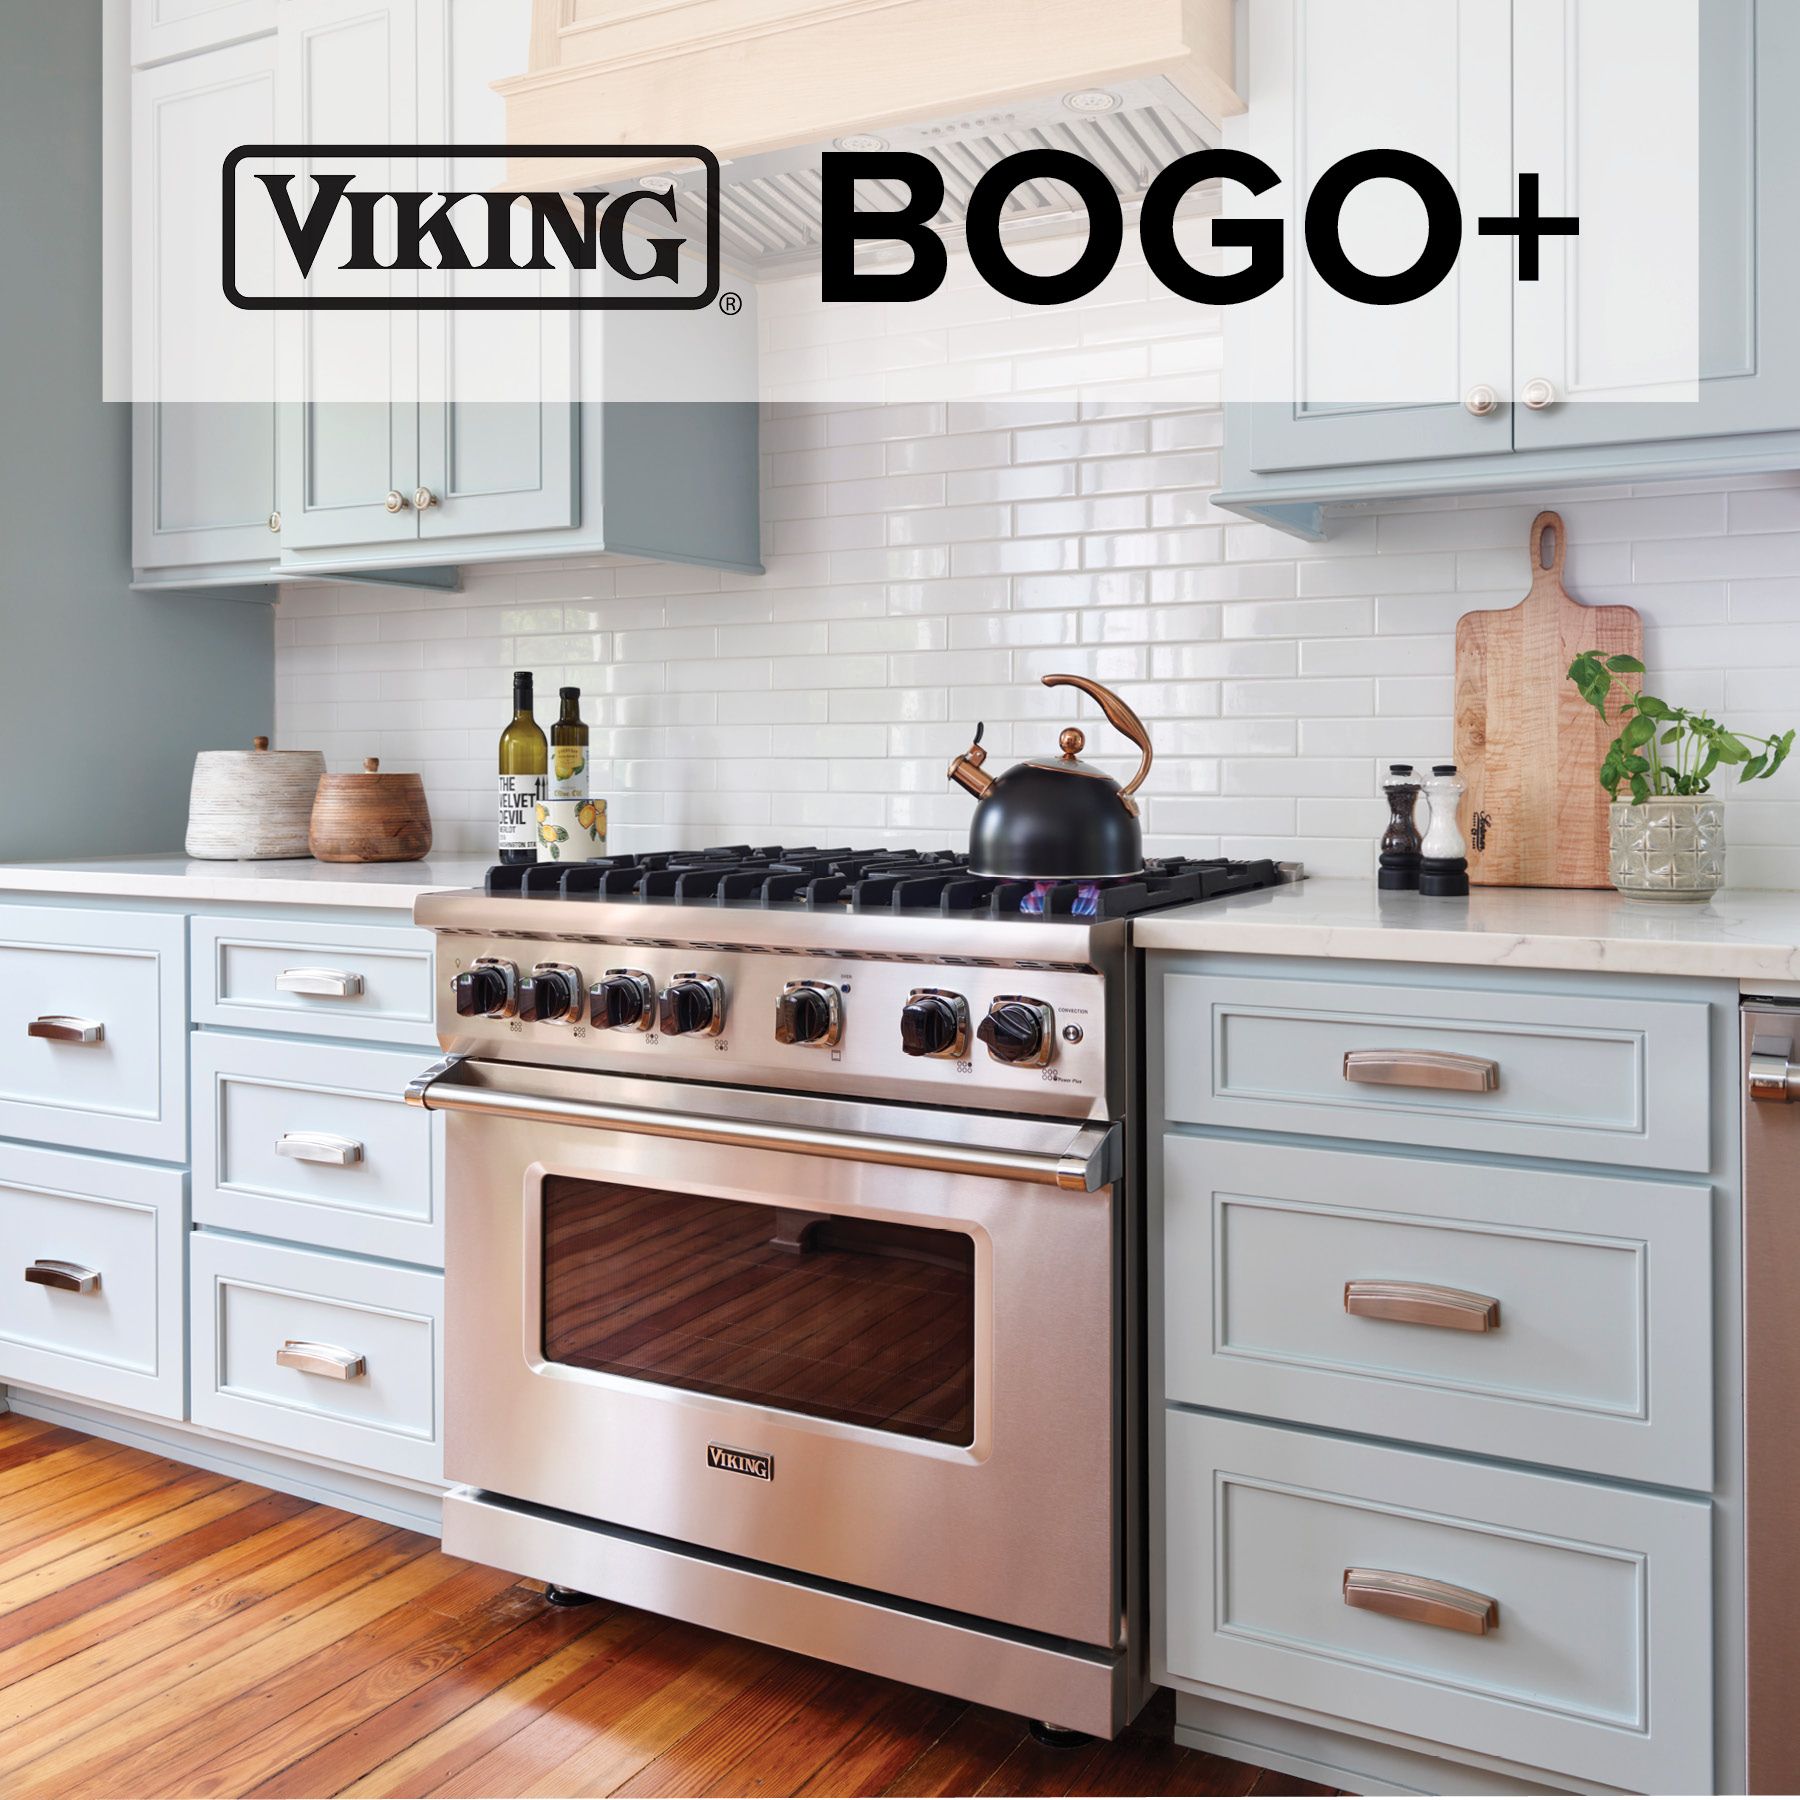 Savings and Offers from Viking - Viking Range, LLC